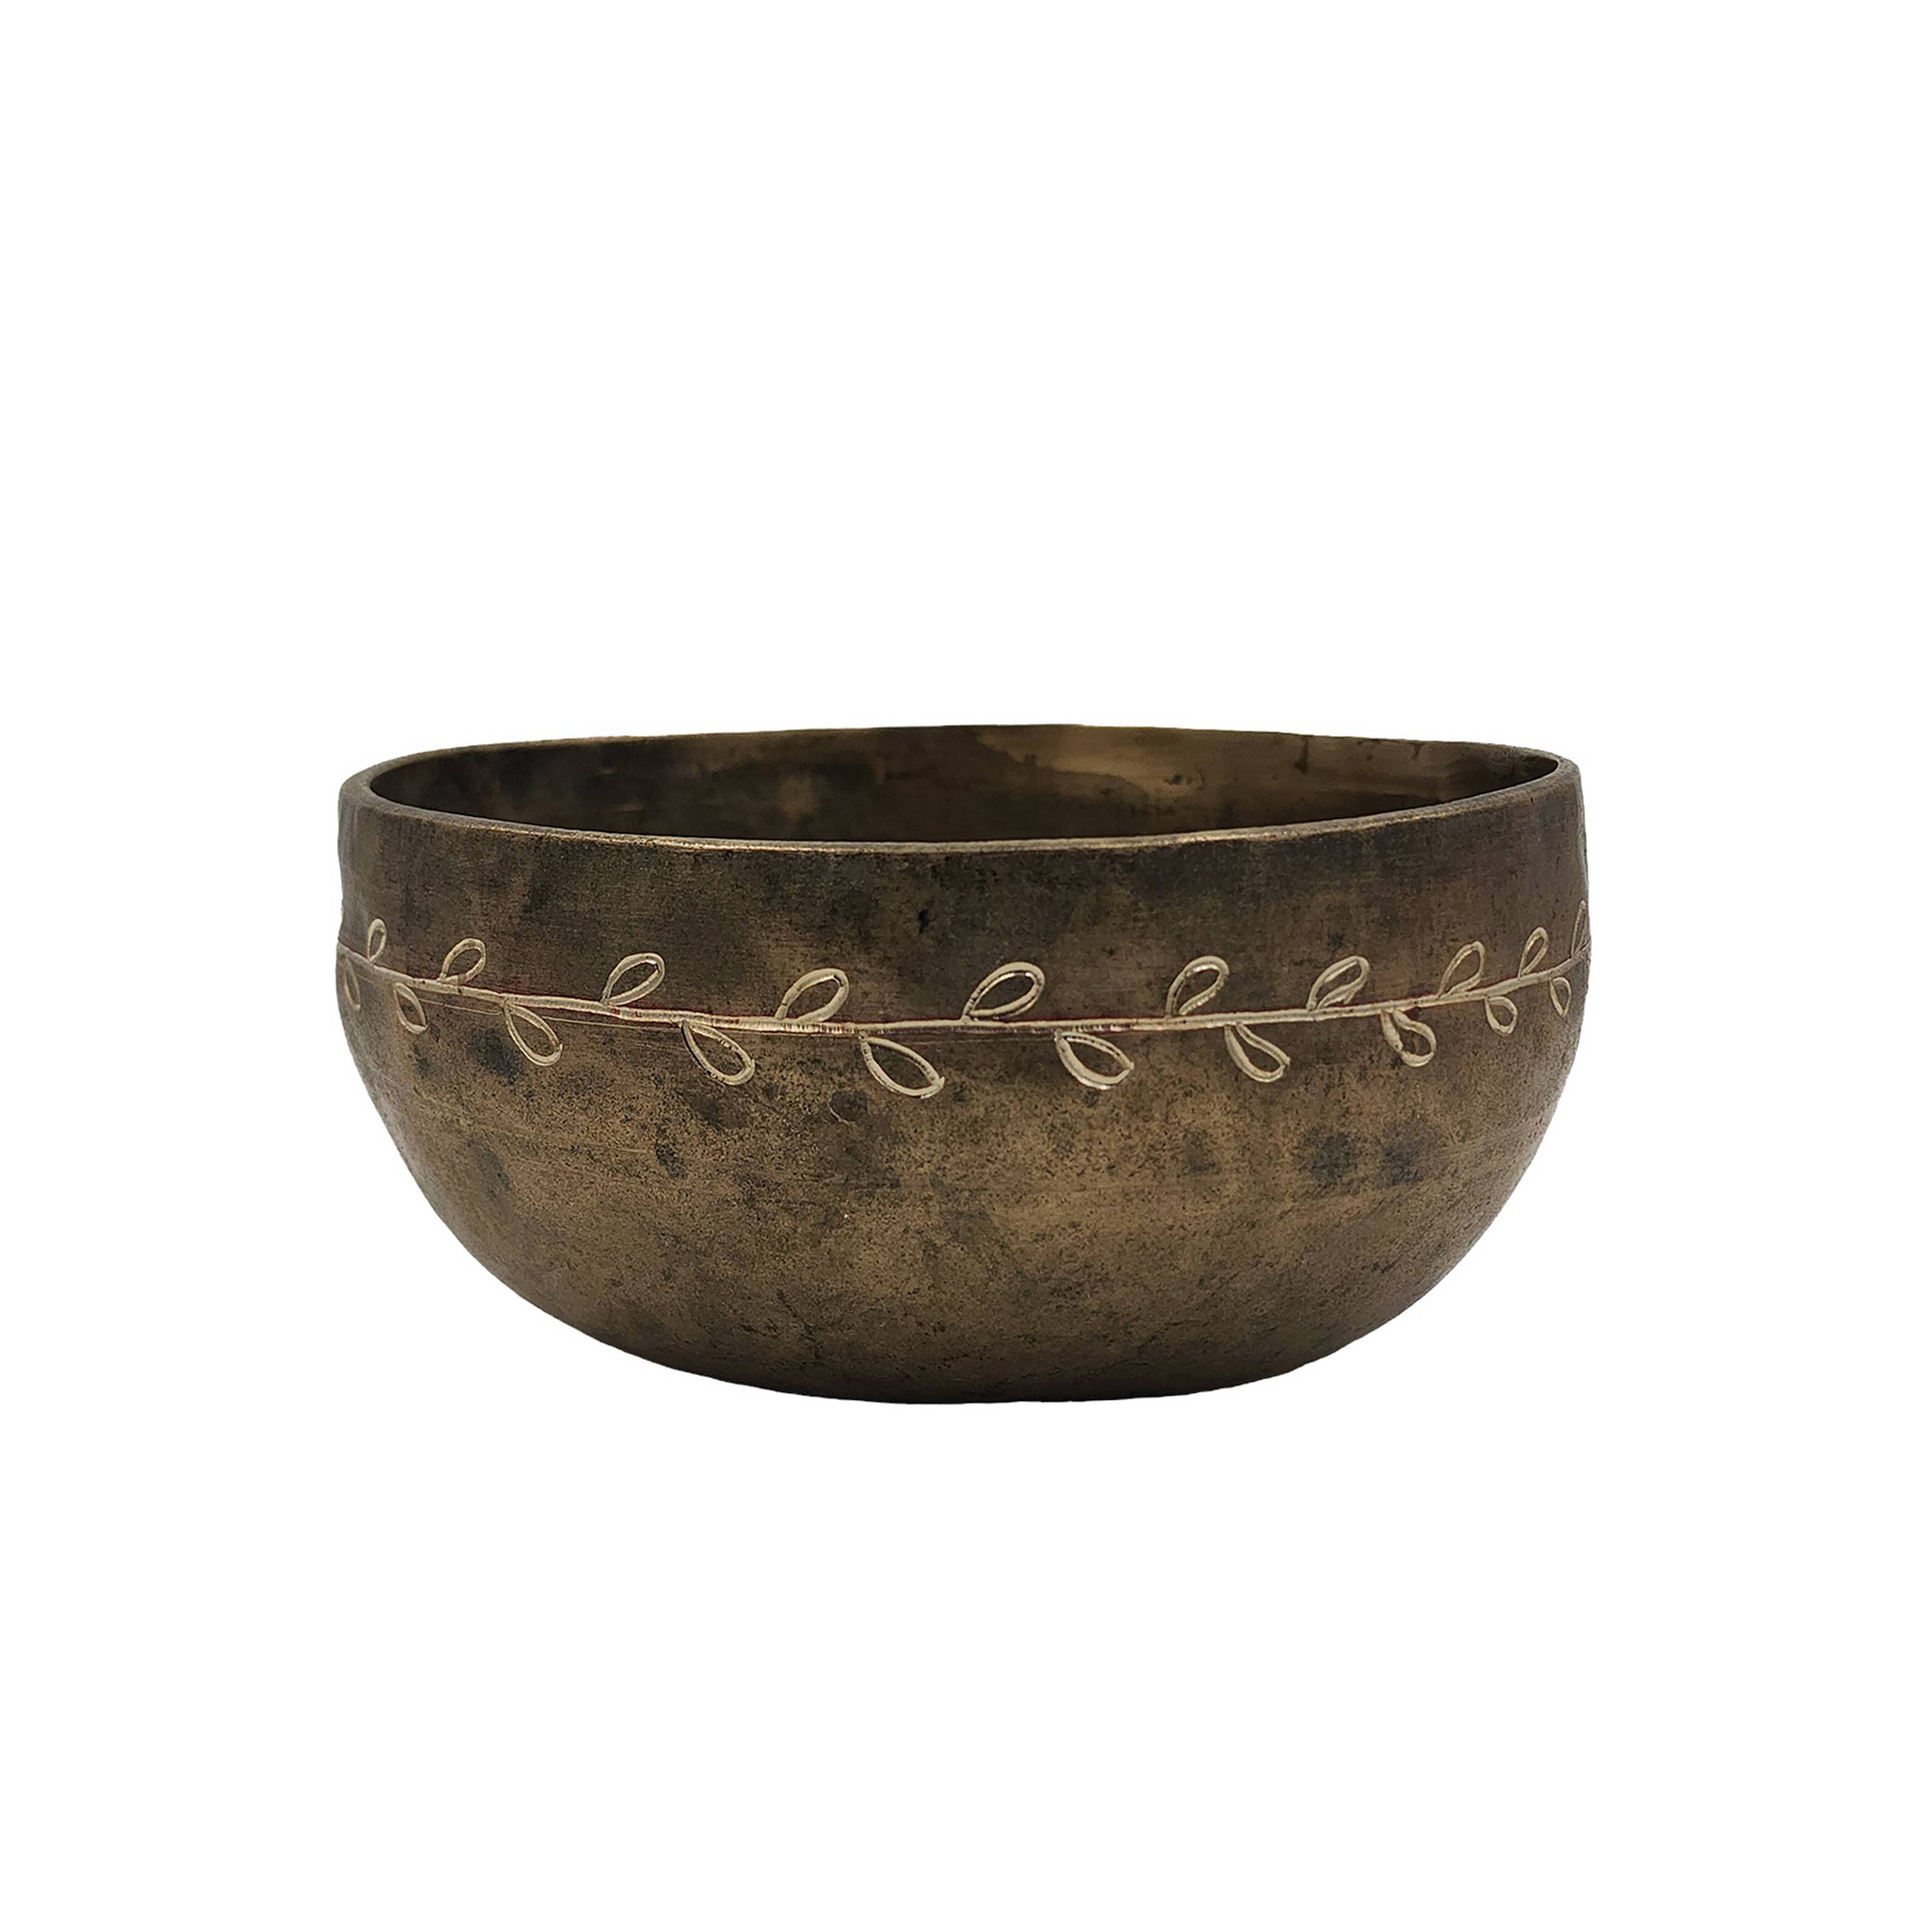 Singing Bowl Thadobati, Buddhist Hand Beaten Bowls, Hand Carved, Antique